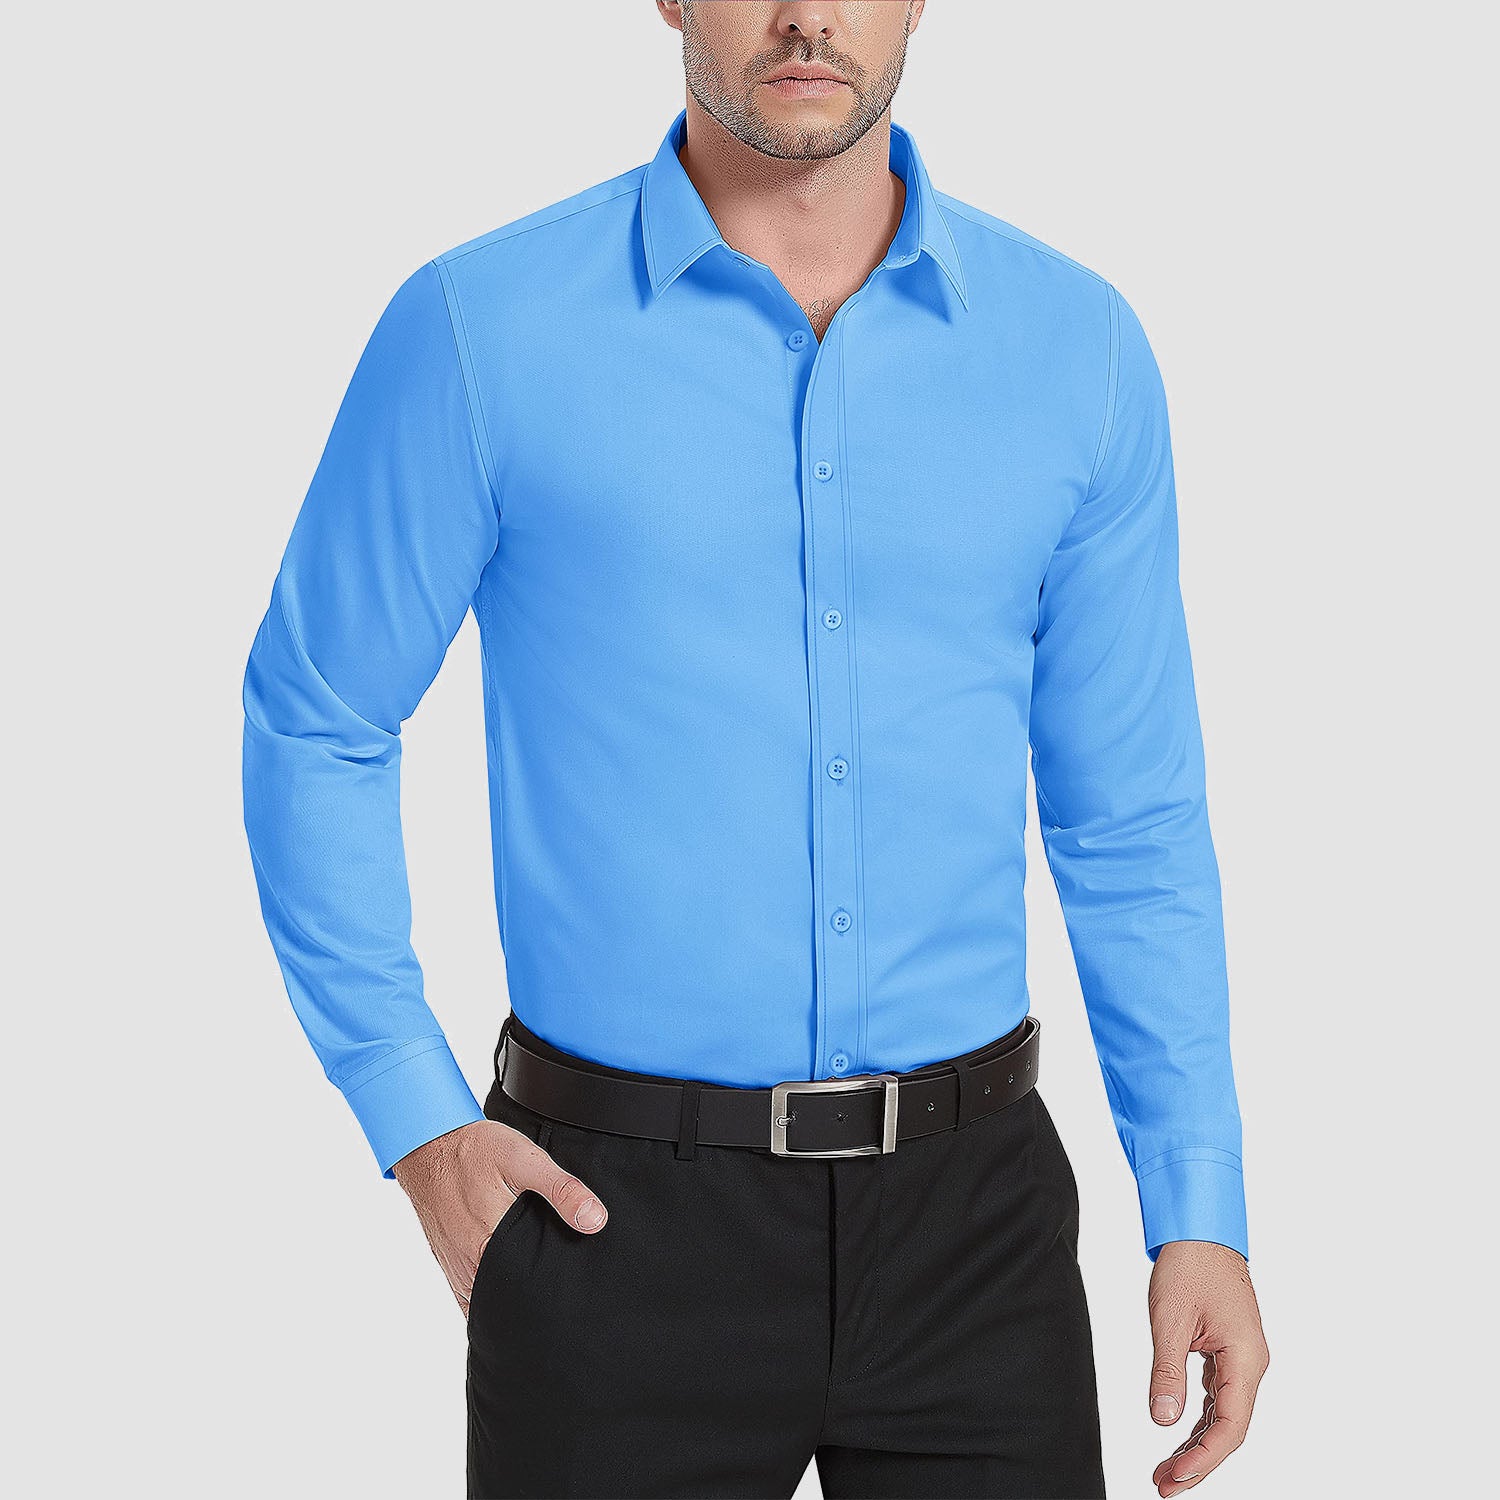 Men's Long Sleeve Shirts Wrinkle-Free Slim Fit Shirt